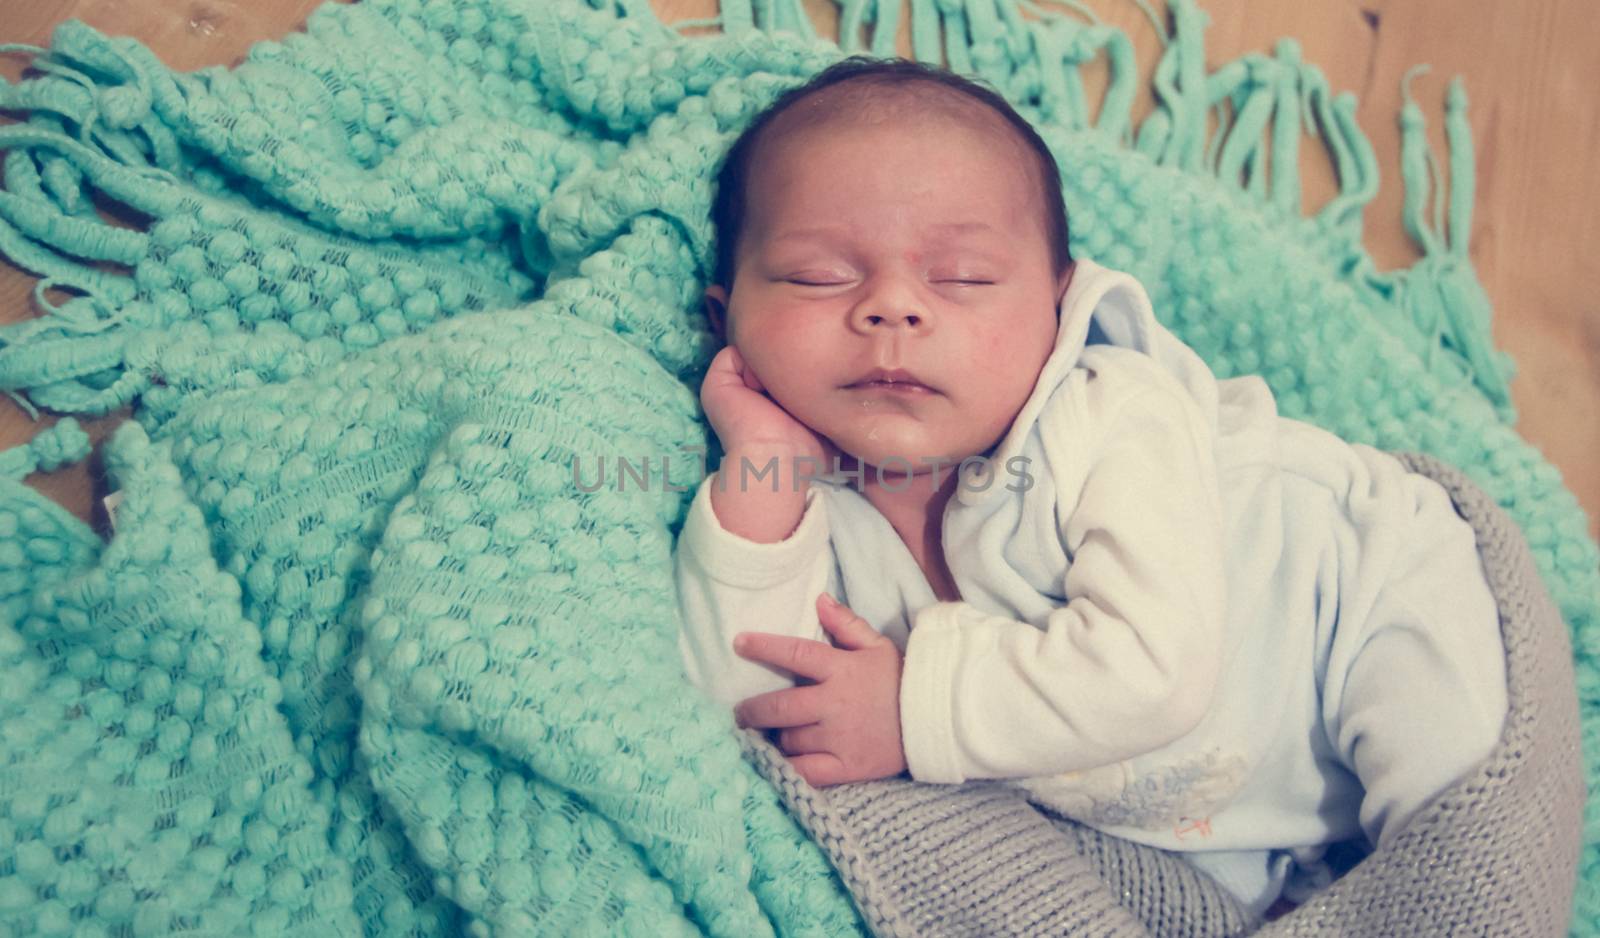 4 weeks old newborn baby boy on green blanket on wooden background by negmardesign